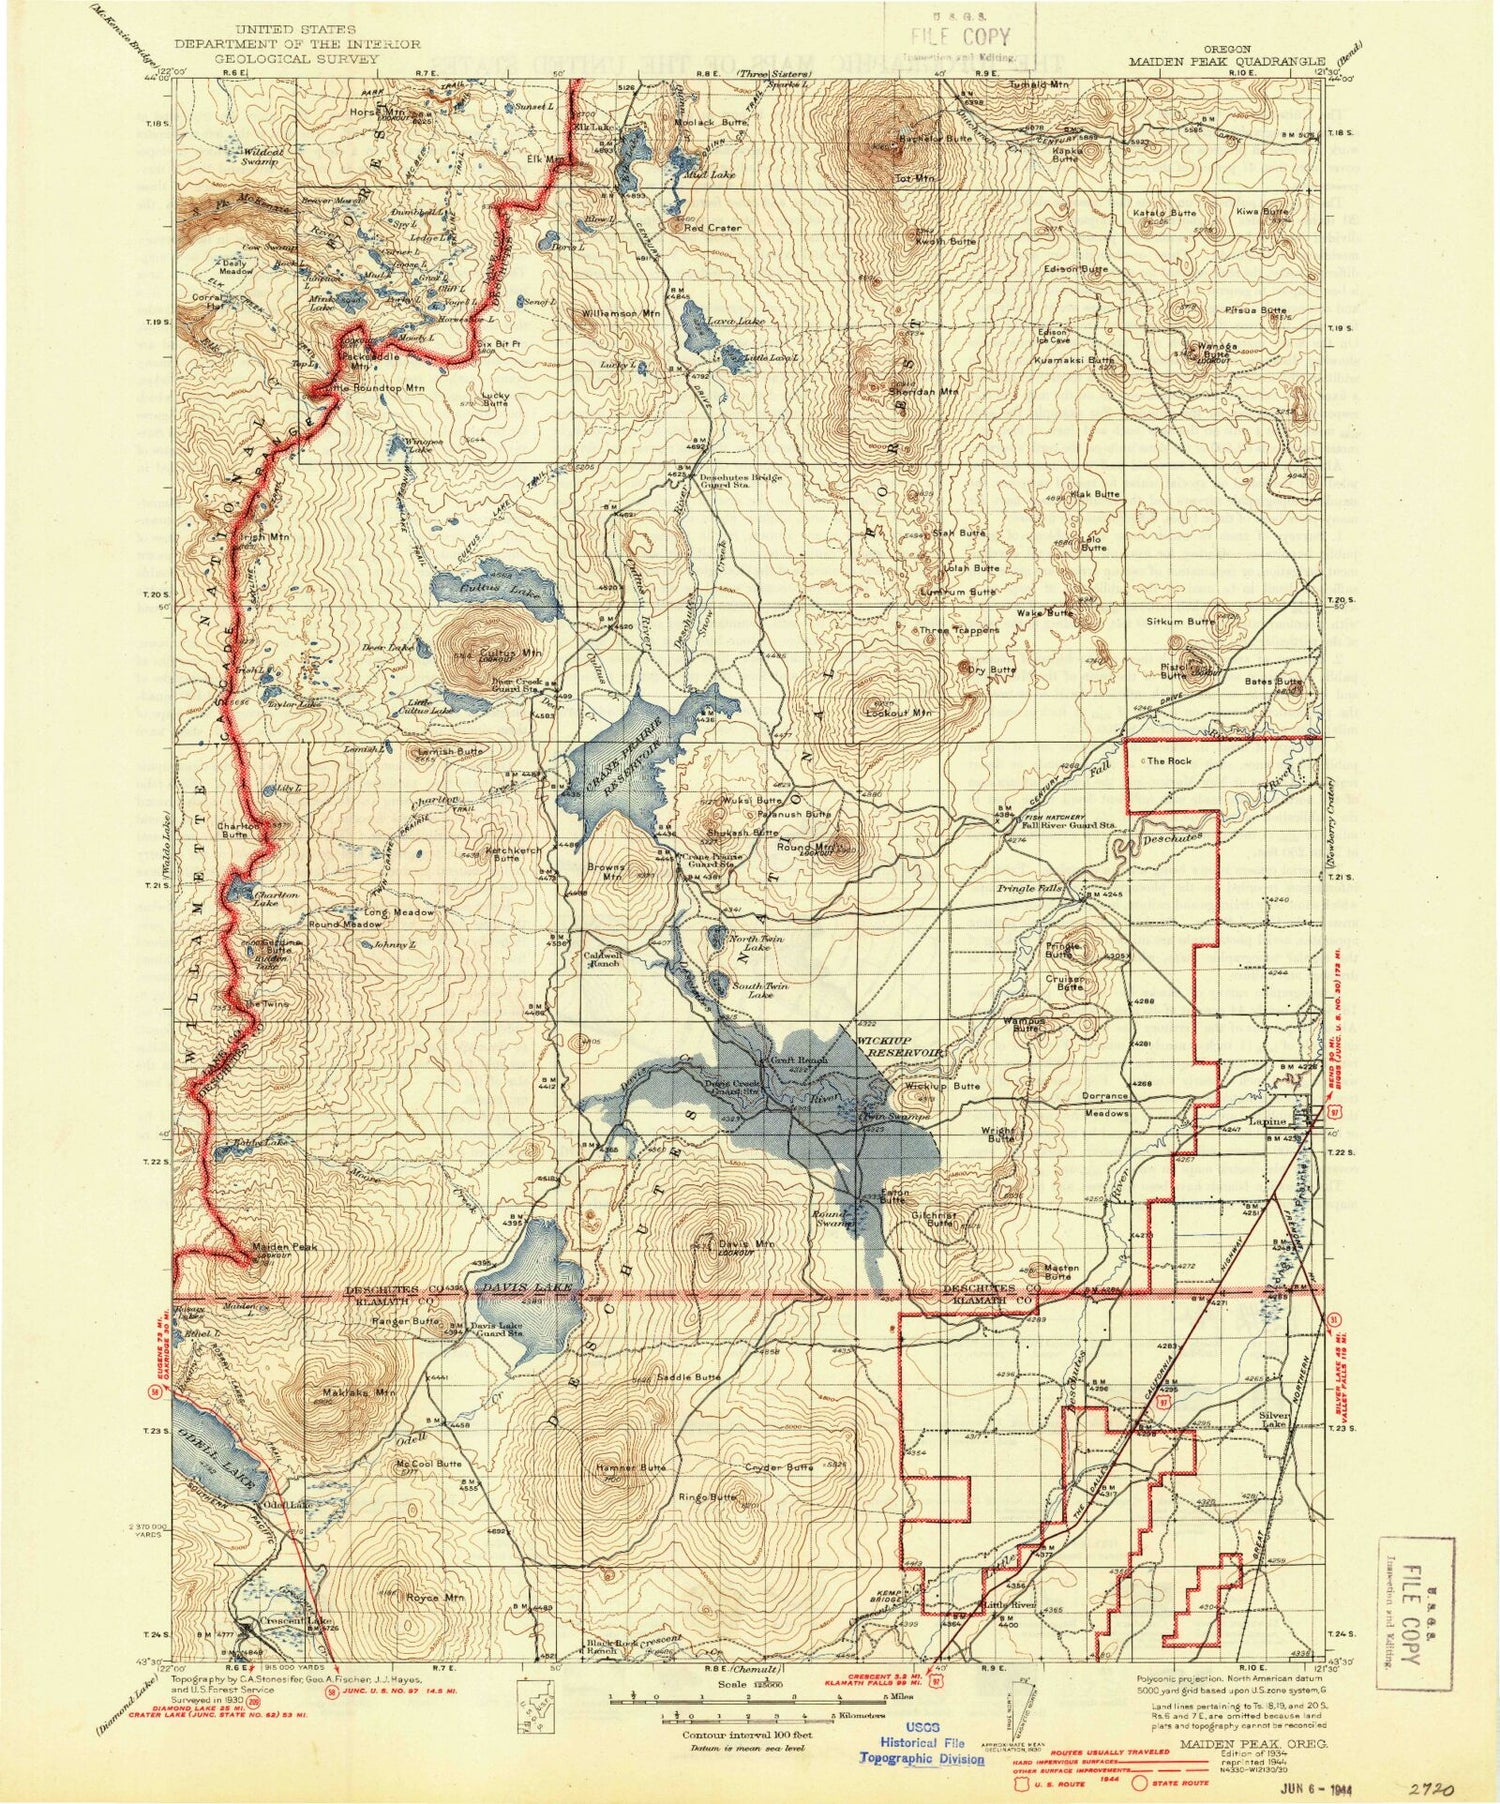 Historic 1934 Maiden Peak Oregon 30'x30' Topo Map Image